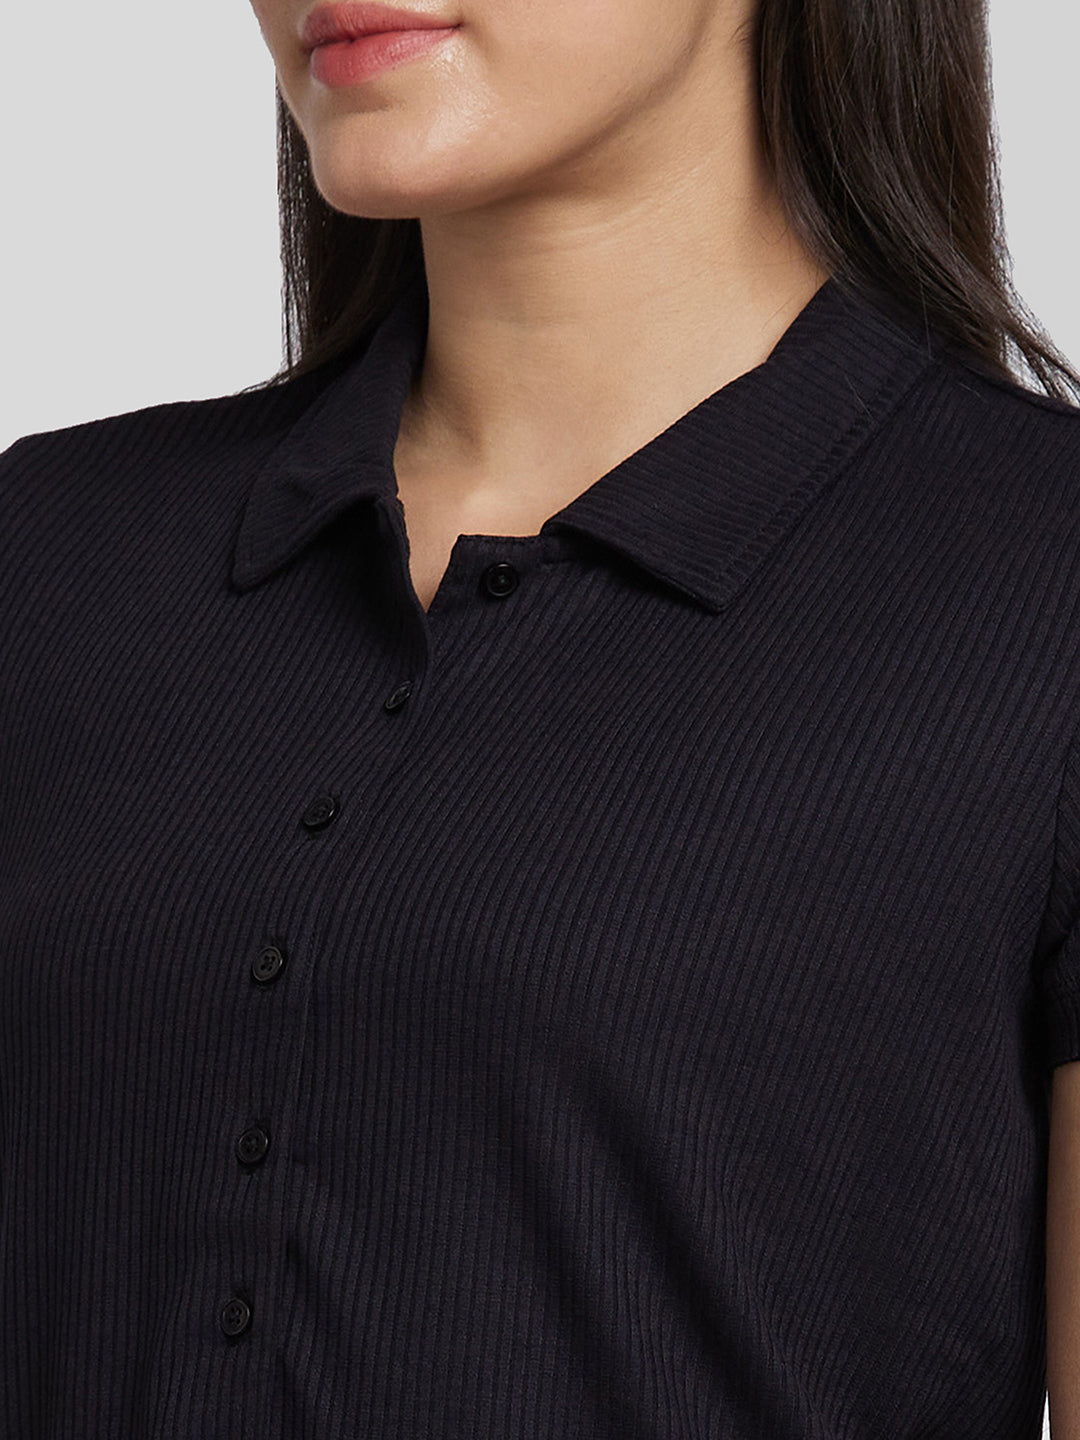 Spykar Black Blended Slim Fit Plain Polo Neck T-Shirts